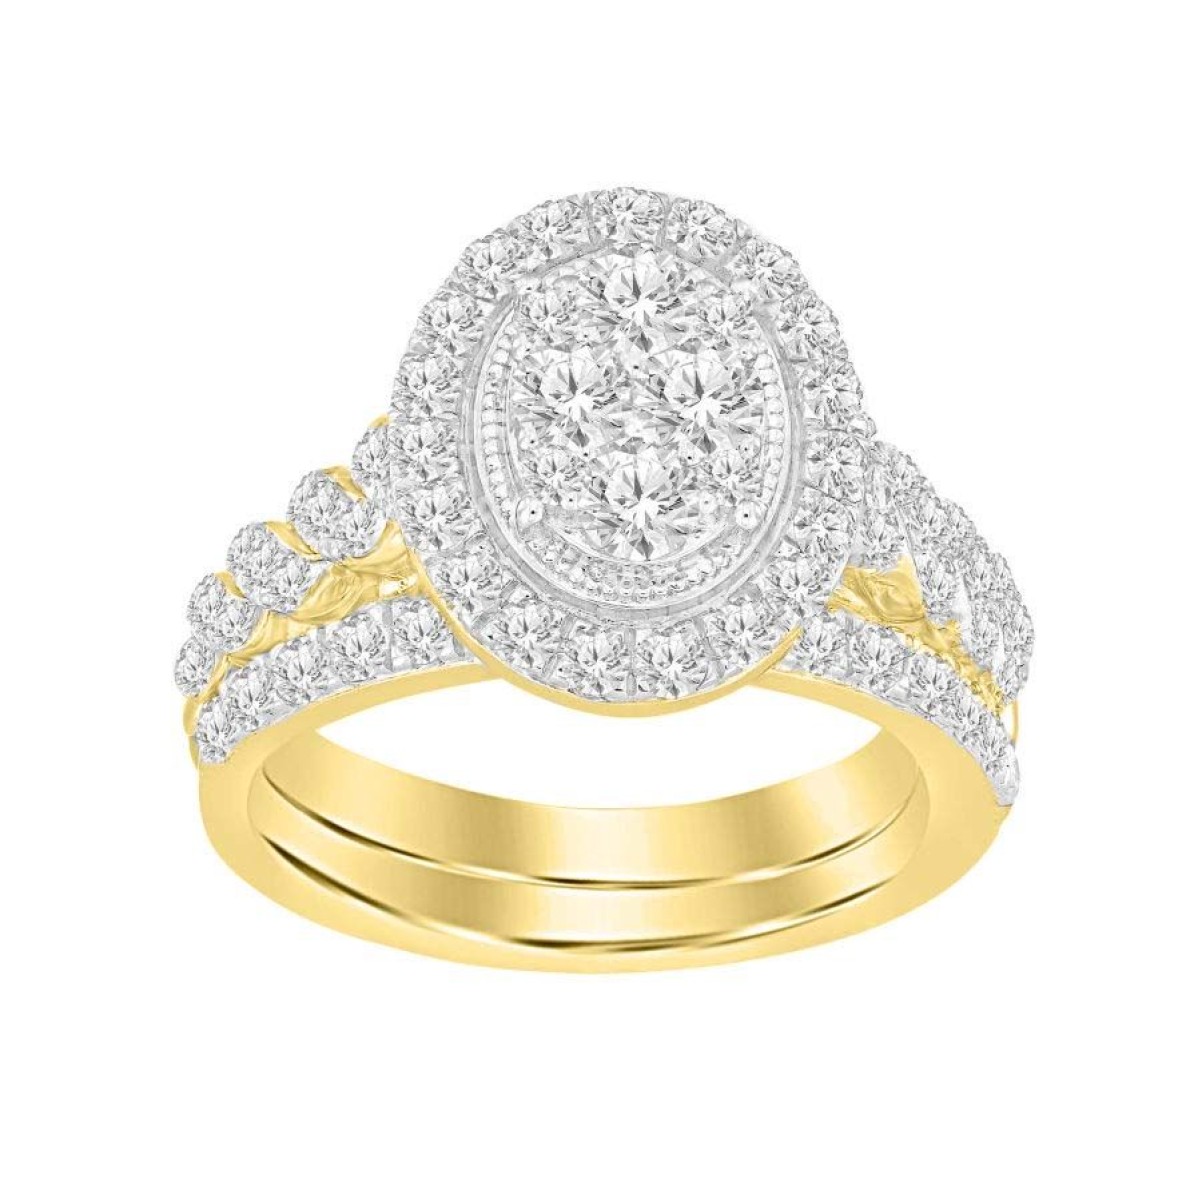 BRIDAL RING SET 1.50CT ROUND DIAMOND 14K YELLOW GOLD